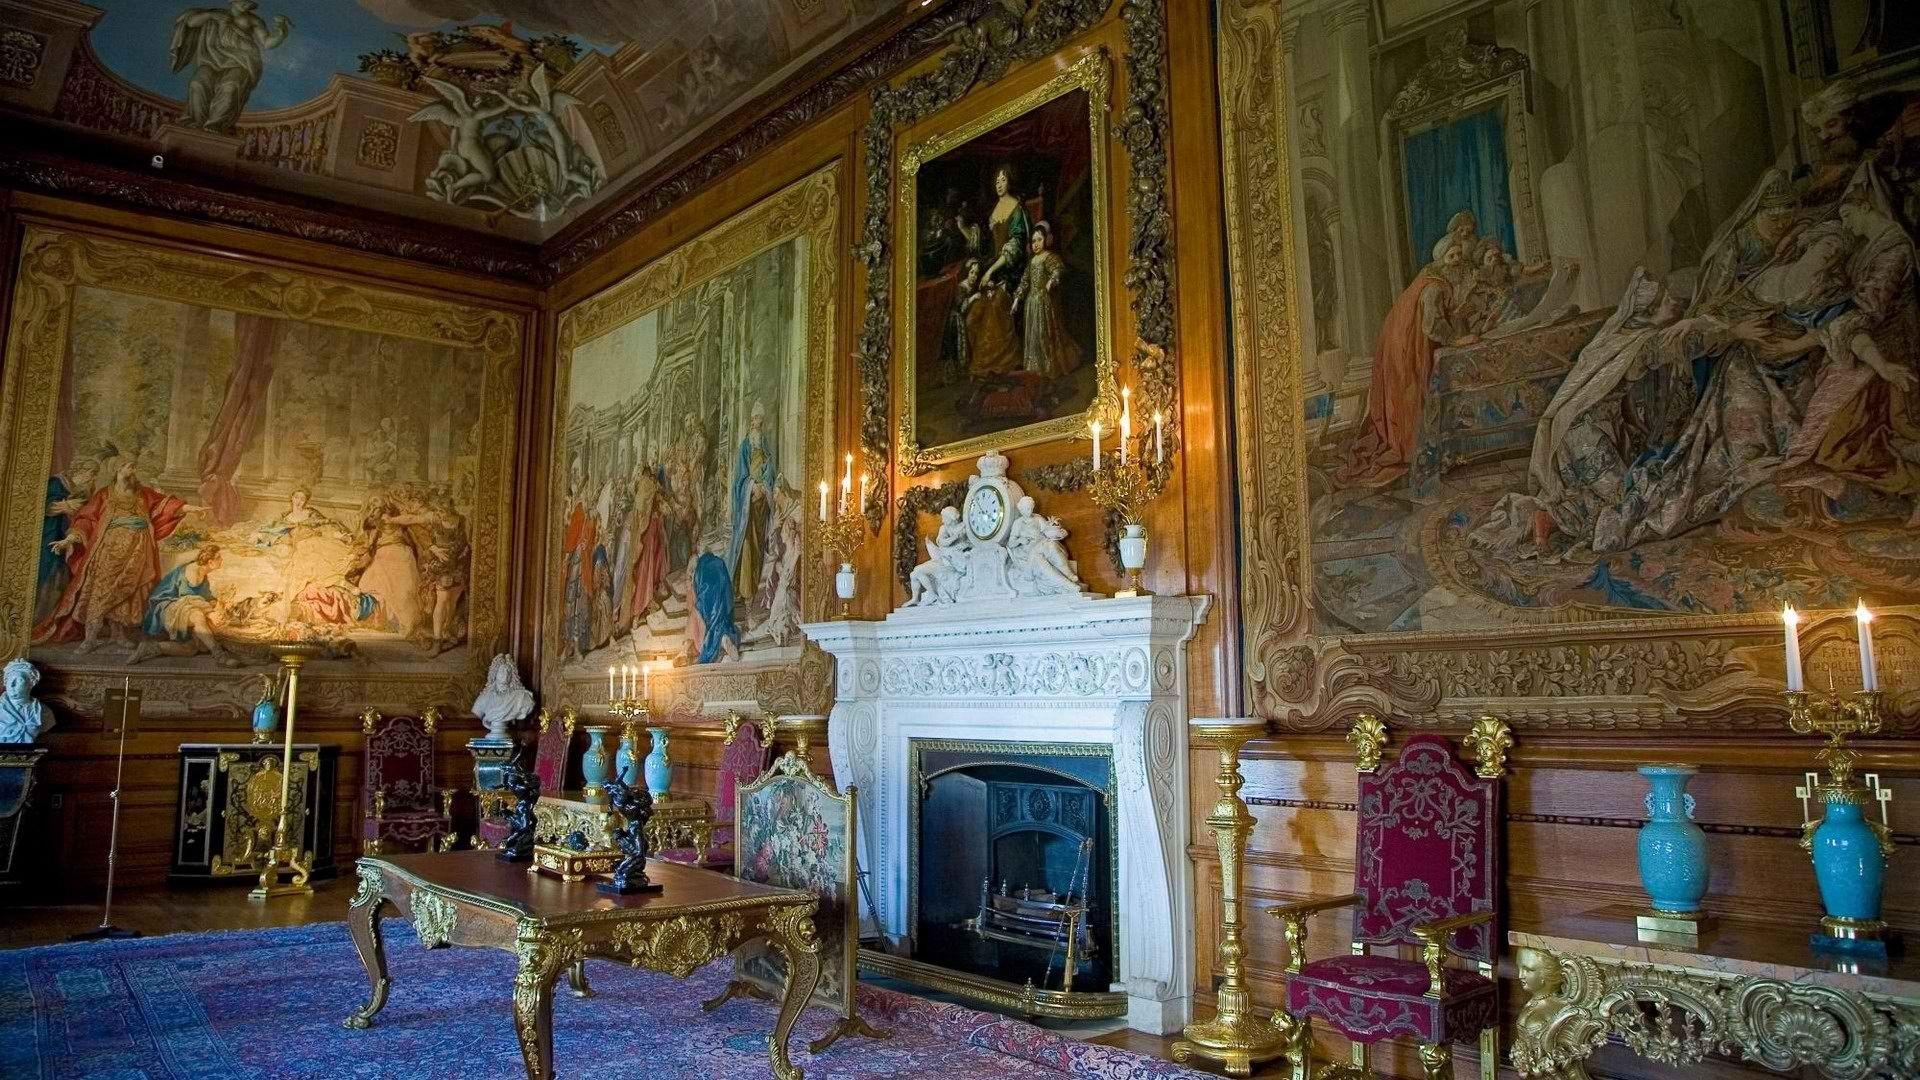 Windsor Castle Interior, United Kingdom widescreen wallpaper. Wide